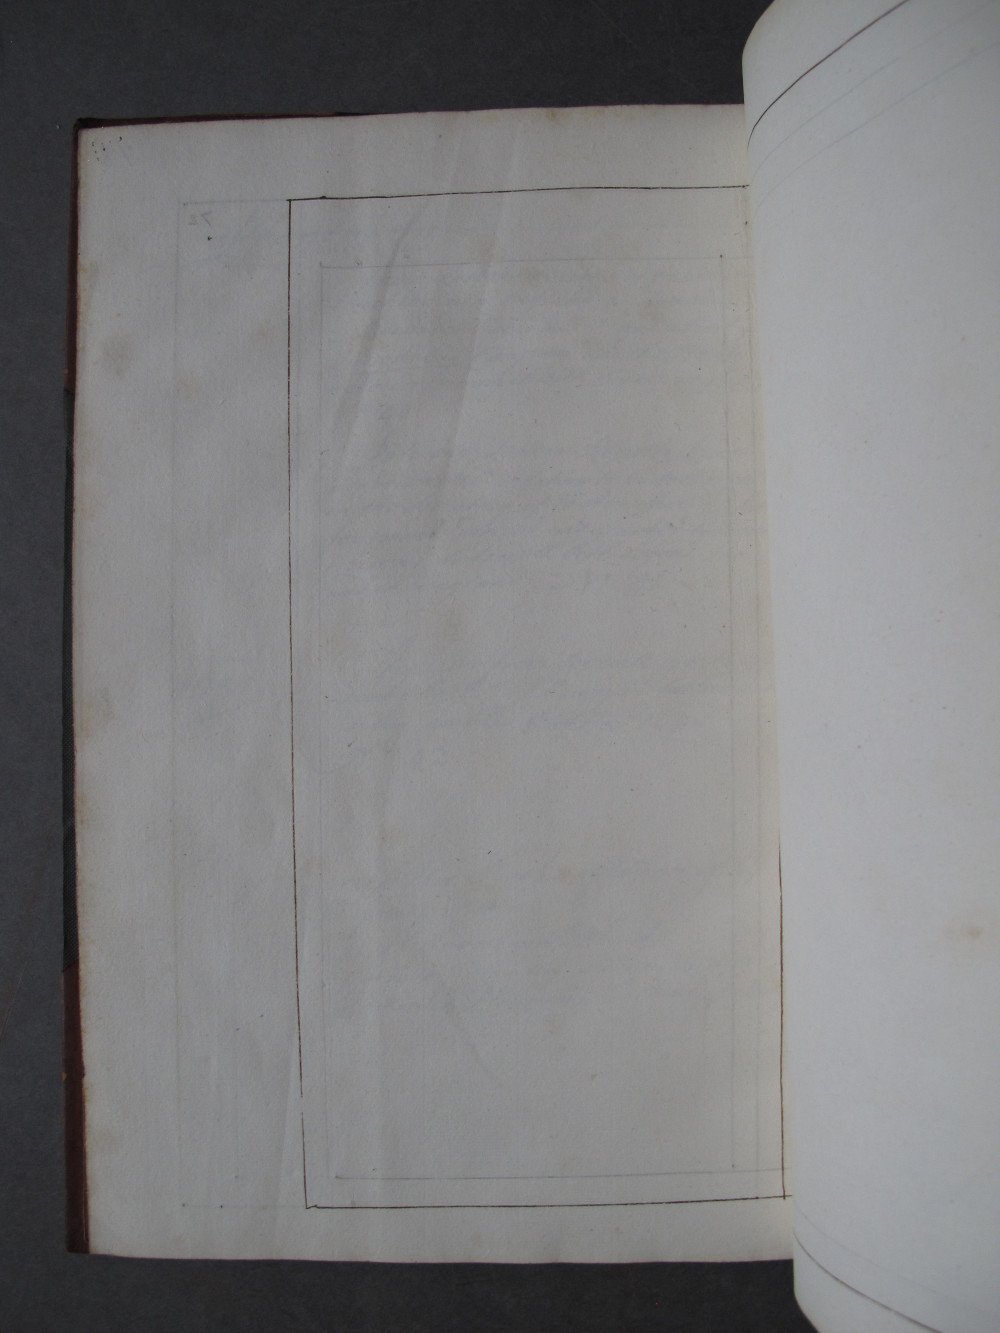 Folio 72 verso